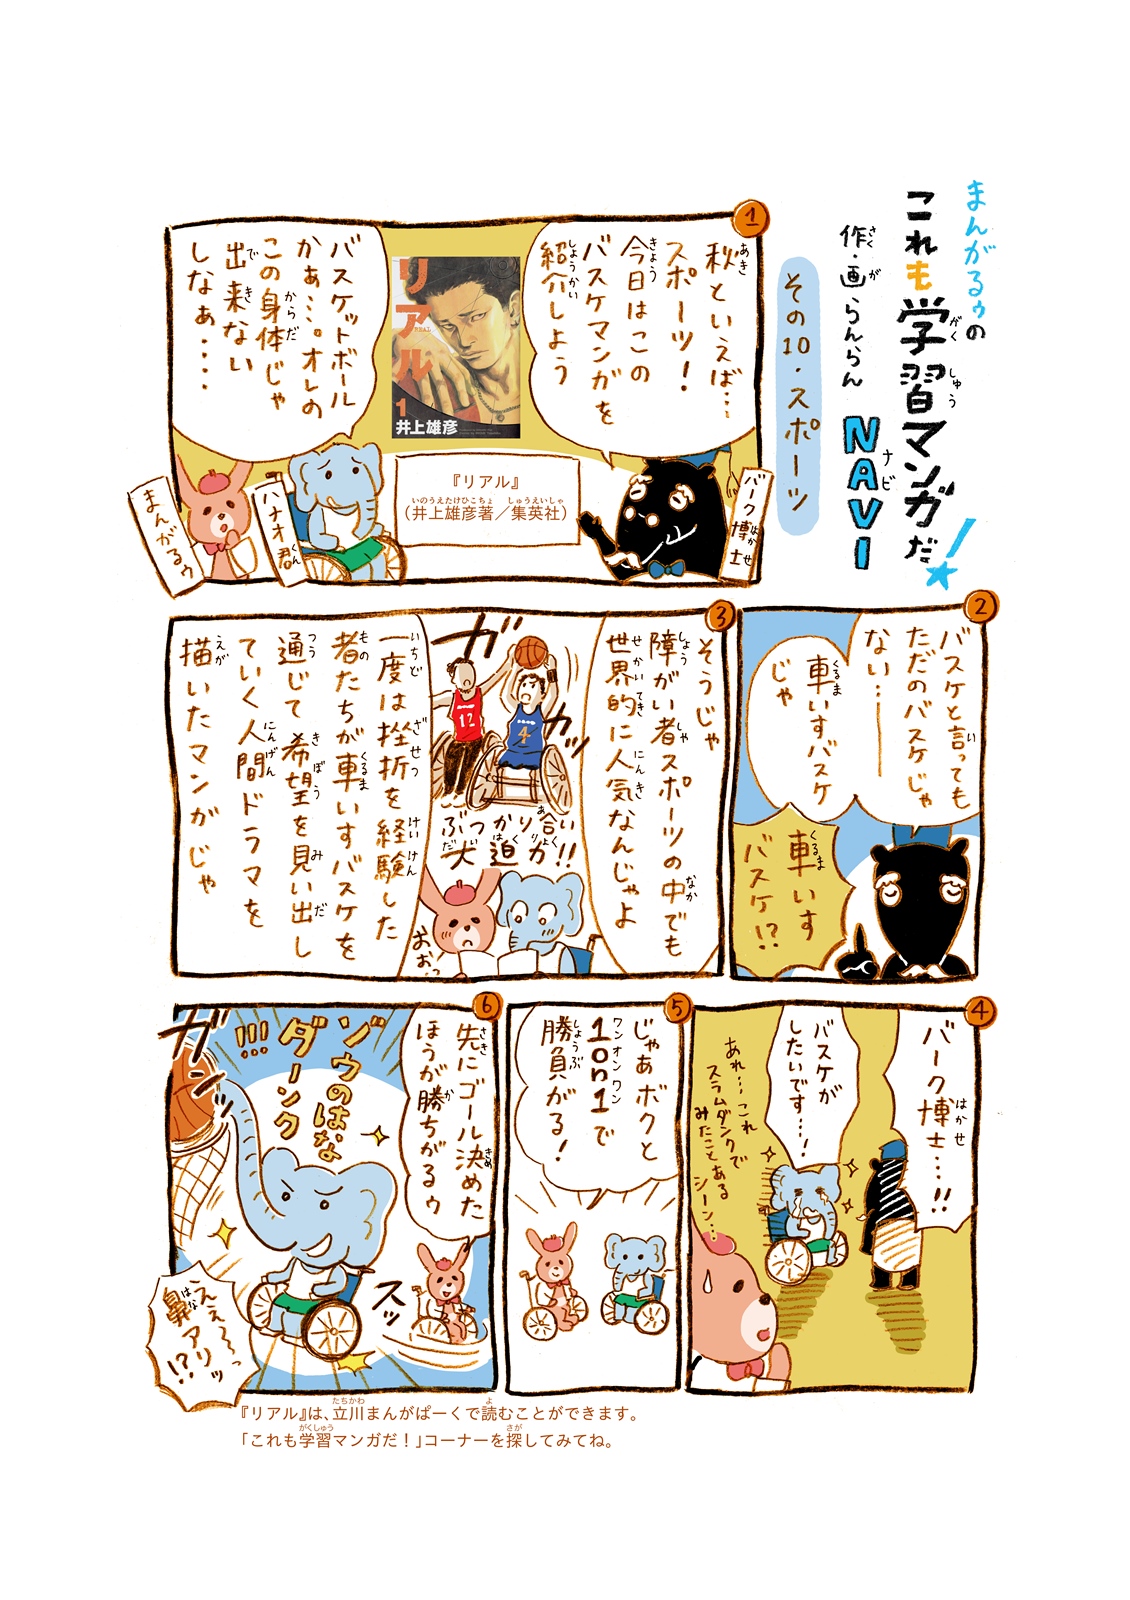 https://mangapark.jp/topics/2020/08/29/images/mangaloo_vol11.jpg